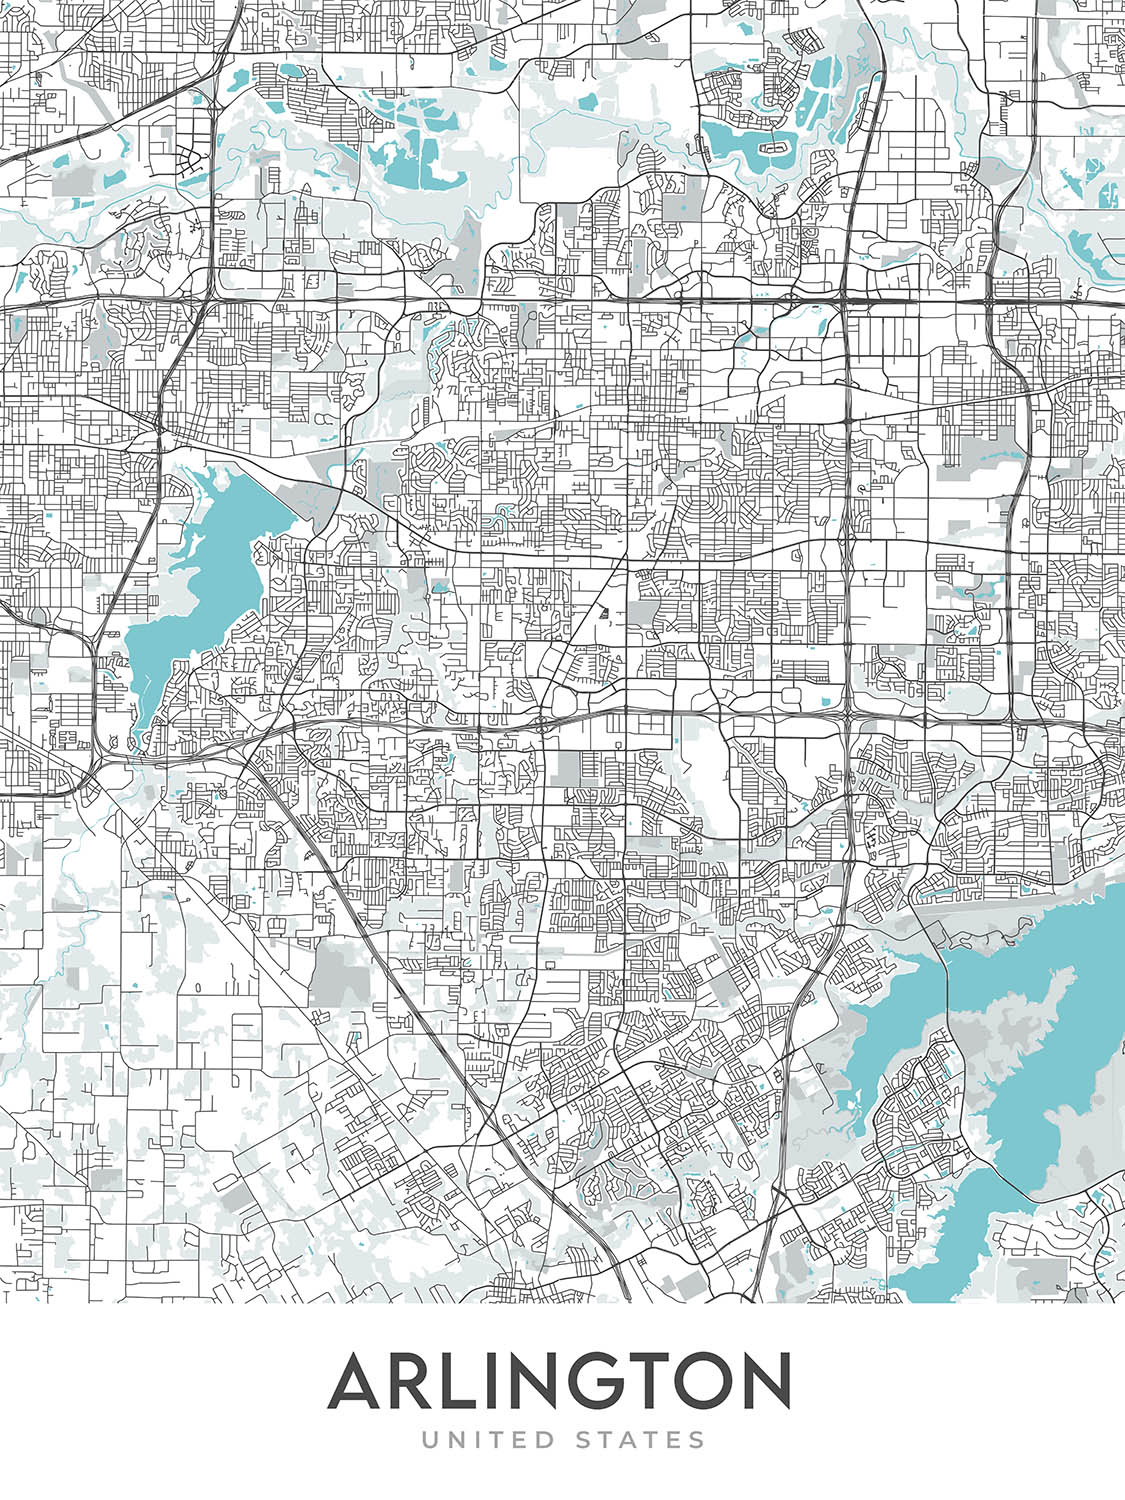 Modern City Map of Arlington, TX: AT&T Stadium, Globe Life Field, Six Flags, UTA, Pantego